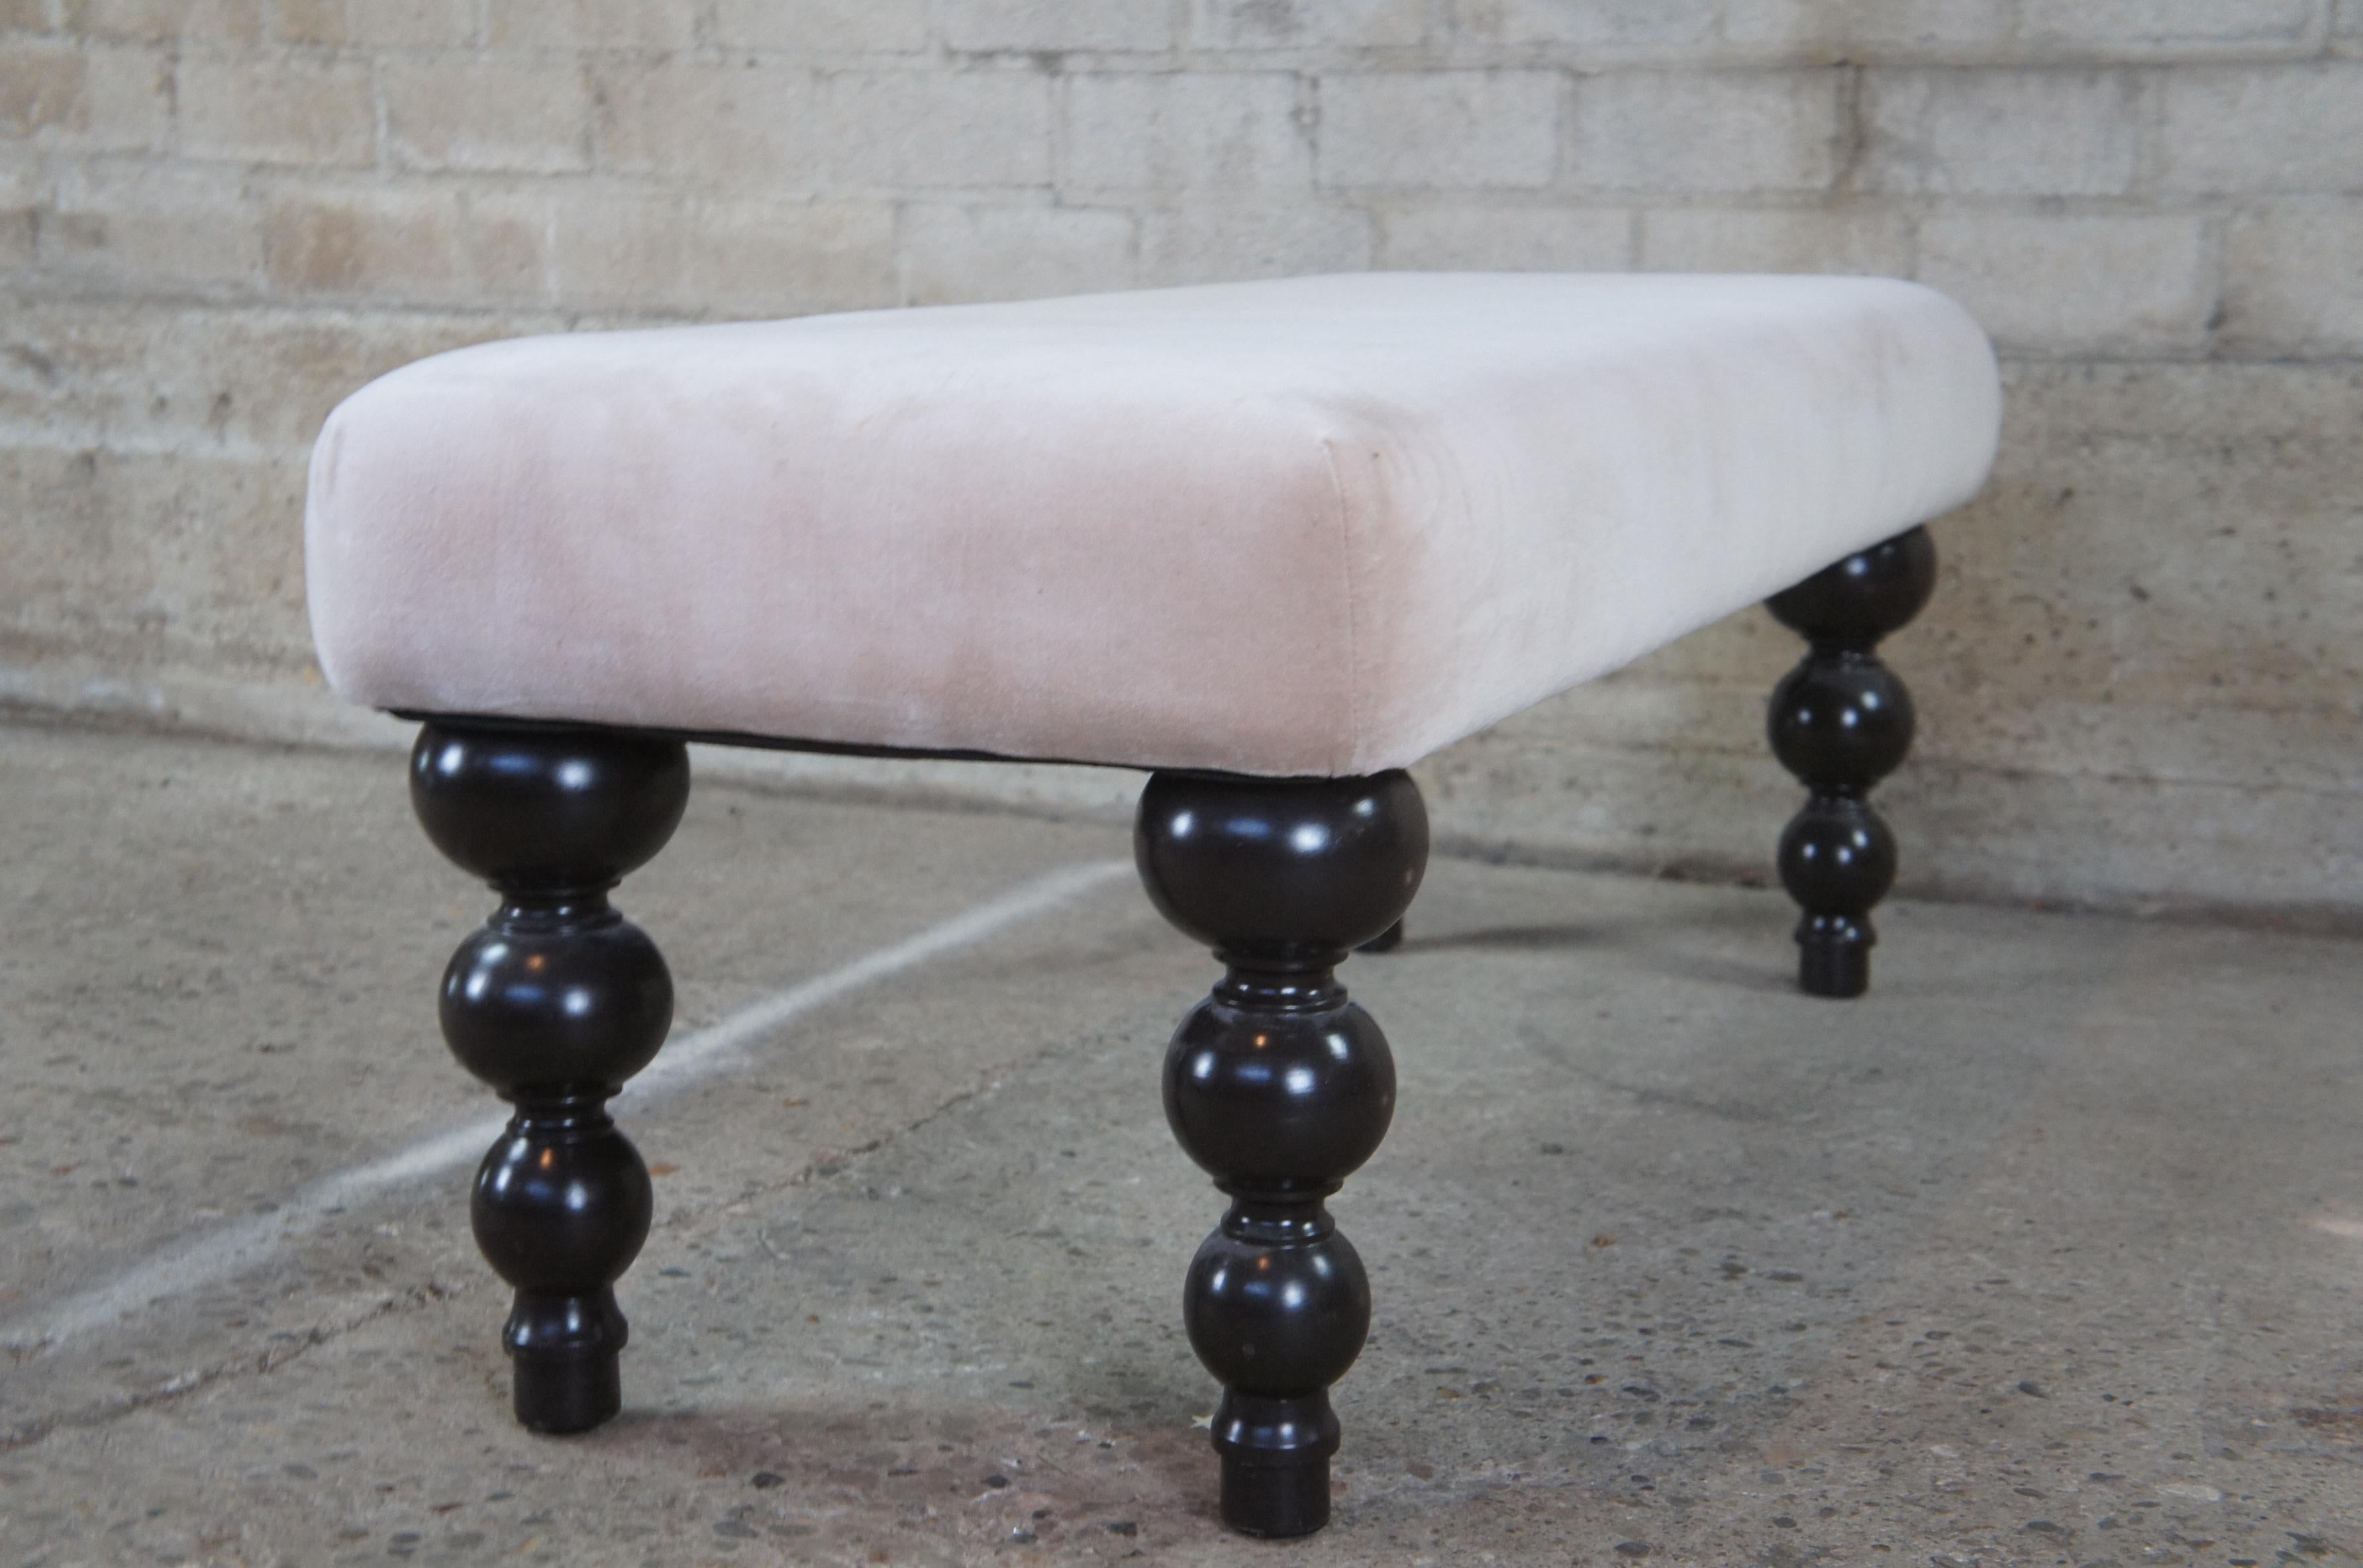 Upholstery Grandin Road Ballard Designs Stacked Ball Window Piano Bench Seat Foot Rest